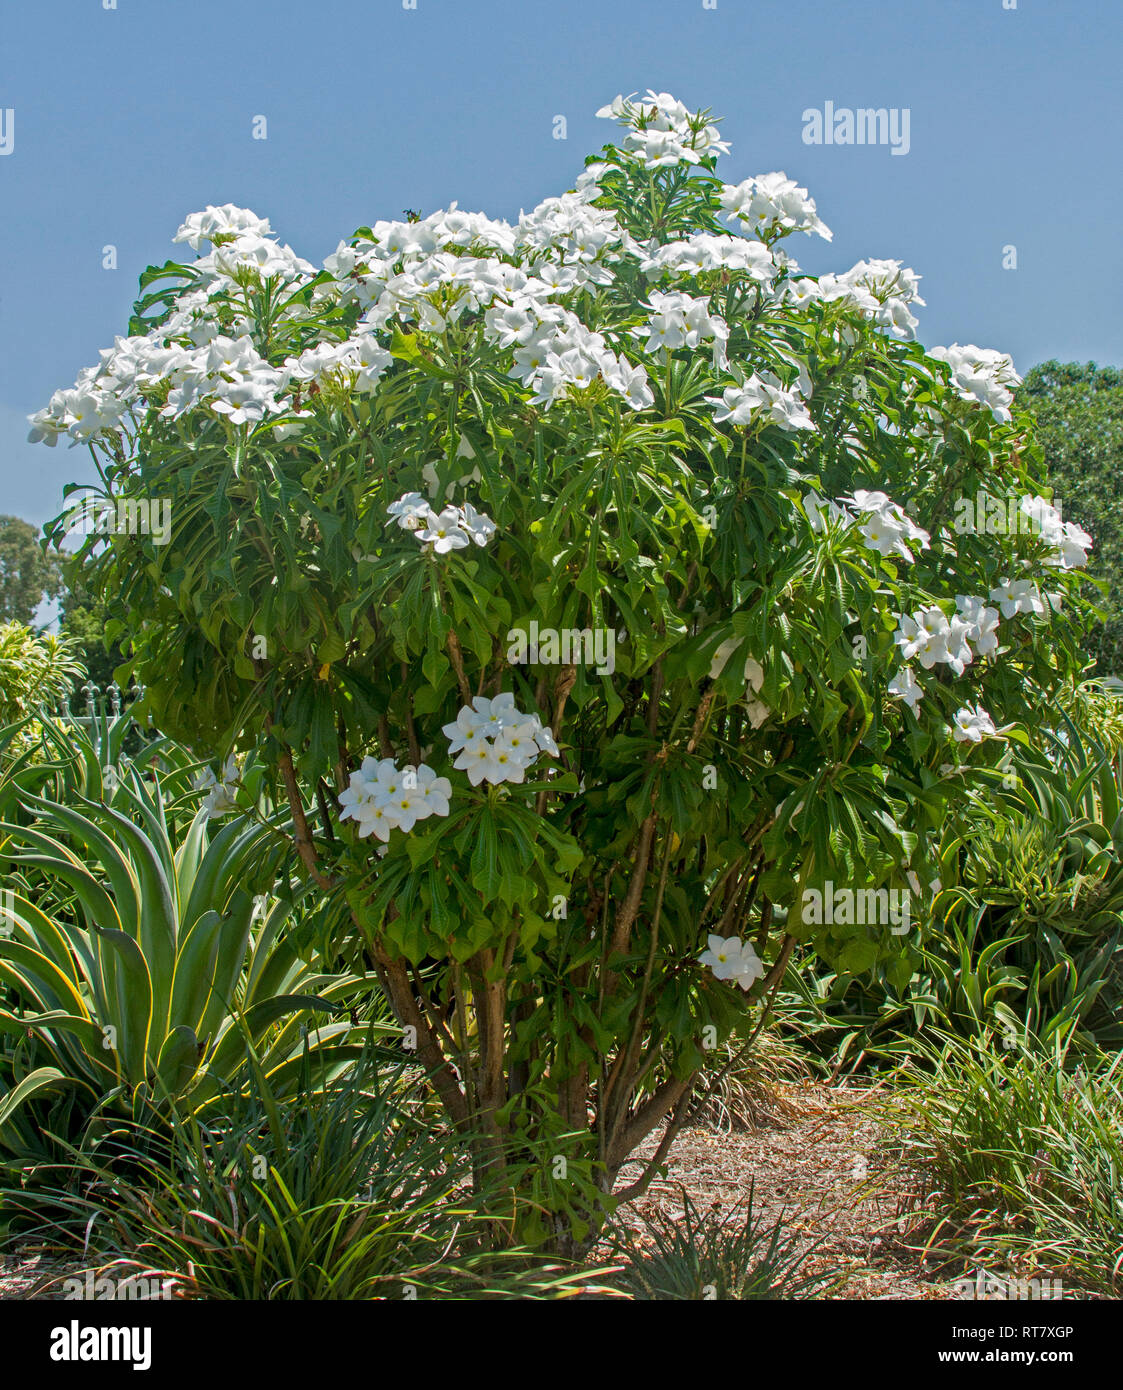 Flowering shrub with masses of white perfumed flowers and bright green leaves, Plumeria pudica 'Everlasting Love', evergreen frangipani Stock Photo